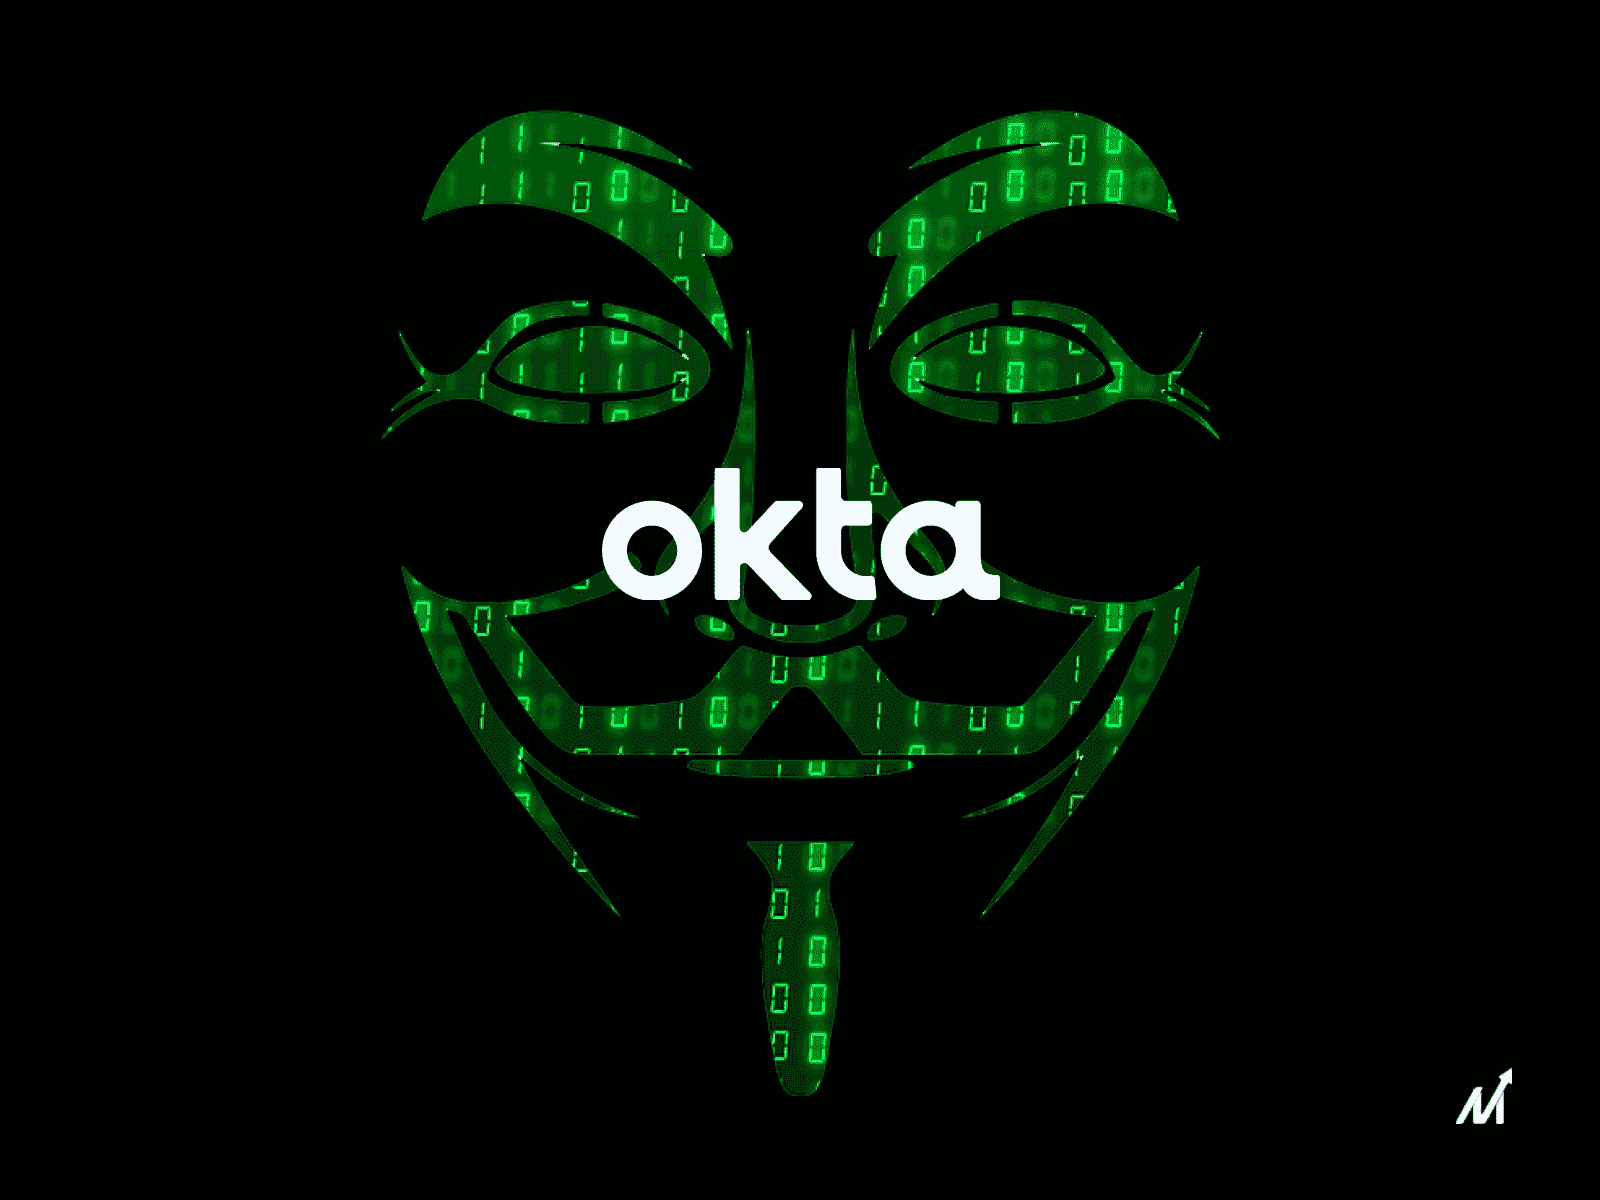 Okta's